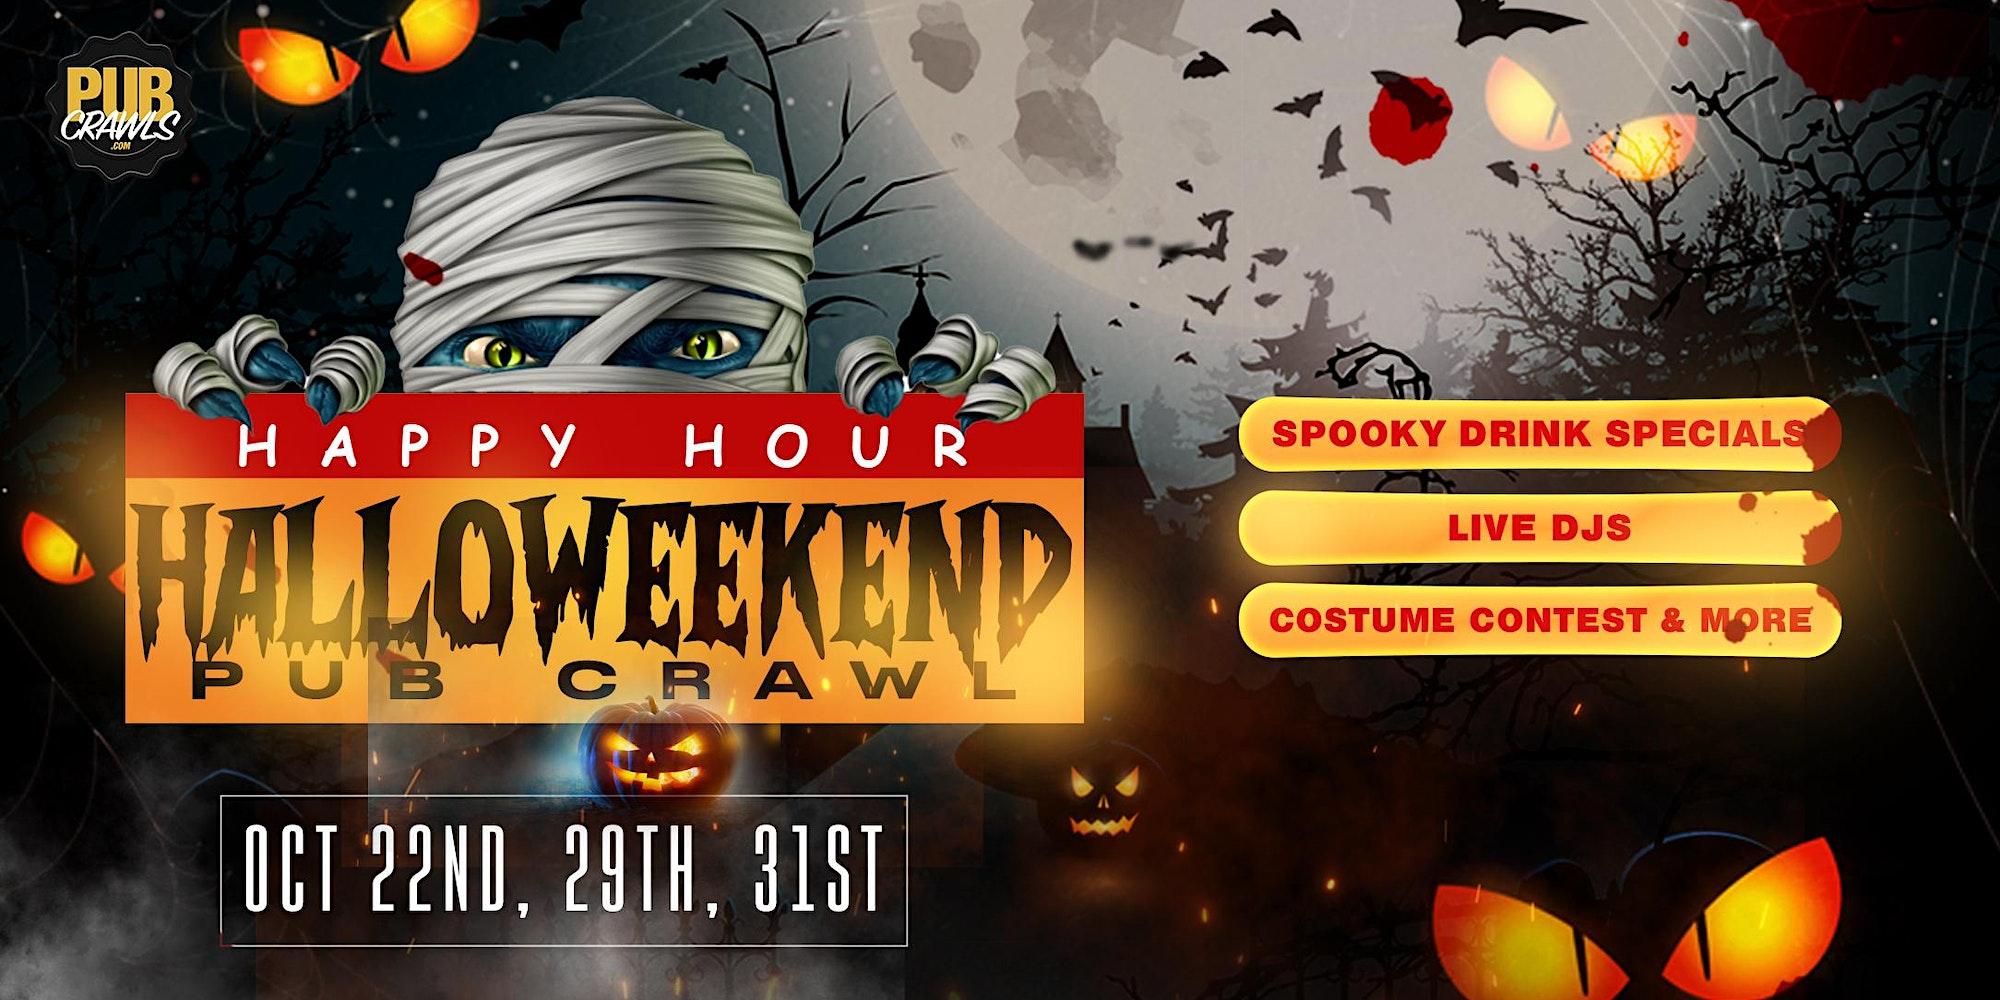 Austin Happy Hour Halloweekend Bar Crawl
Sat Oct 22, 4:00 PM - Mon Oct 31, 10:00 PM
in 3 days